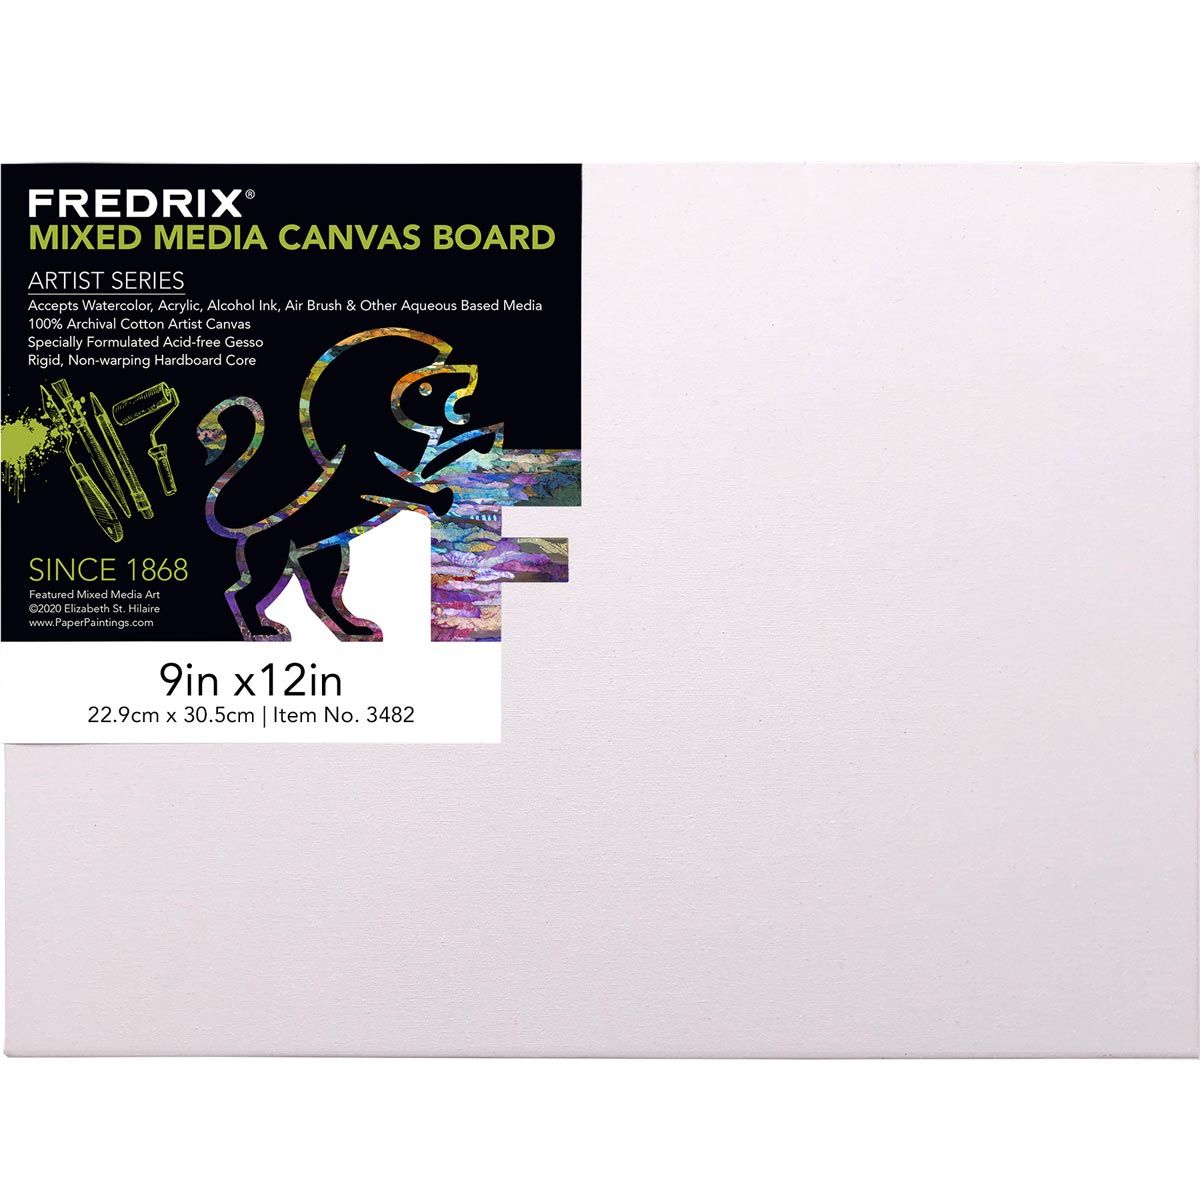 Fredrix Mixed Media Canvas Boards 9 x 12 inches